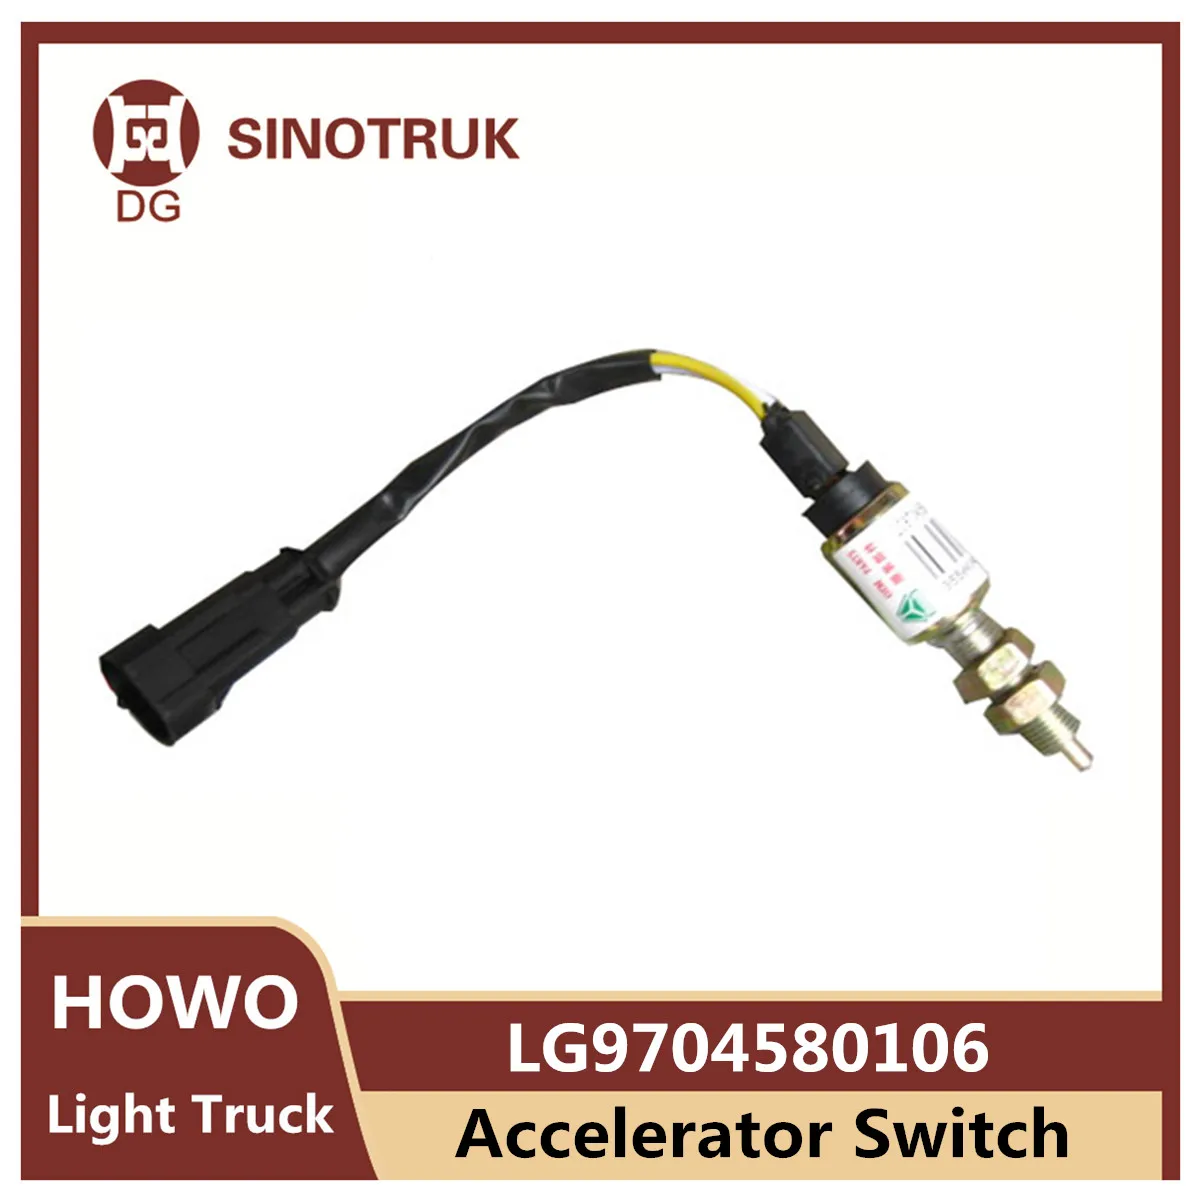 Accelerator Switch LG9704580106 for Sinotruk Howo Light Truck Clutch Switch Original Auto Truck Parts